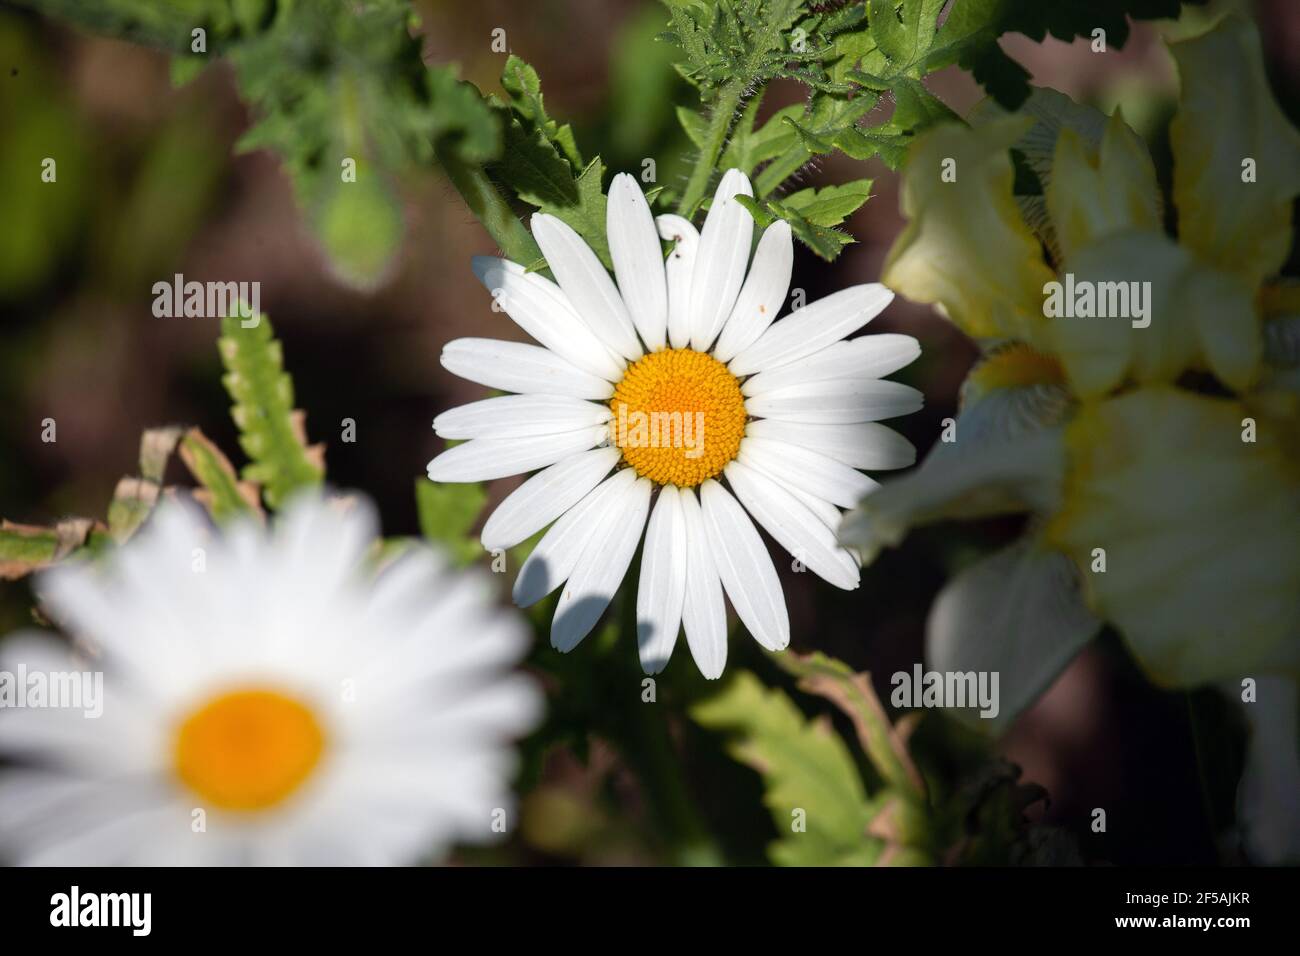 Flower of an ox eye daisy Chrysanthemum leucanthemum Stock Photo